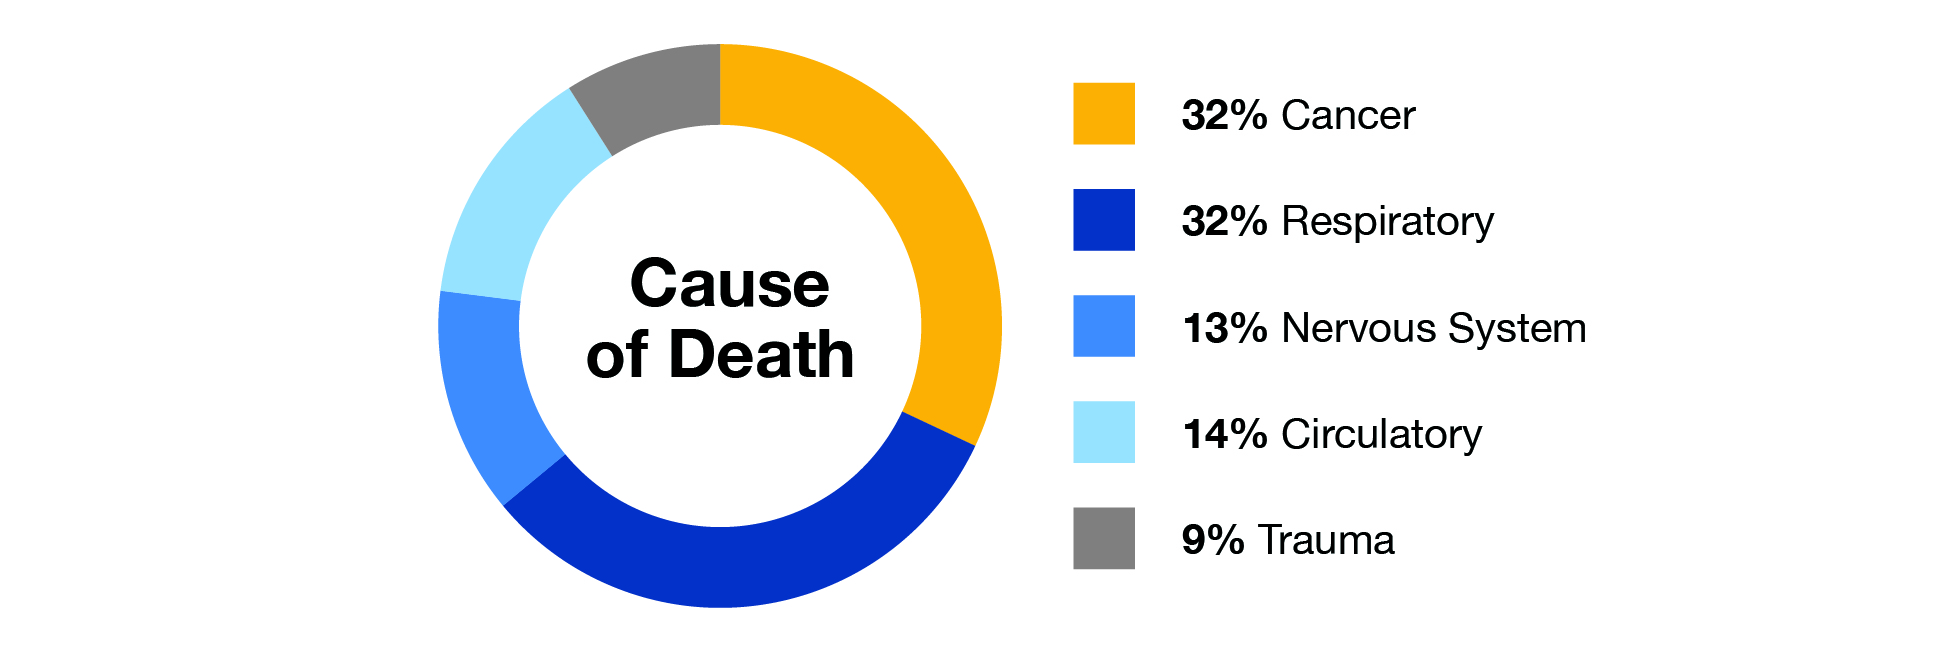 Cause of death: 32% cancer, 32% respiratory, 13% nervous system, 14% circulatory, and 9% trauma